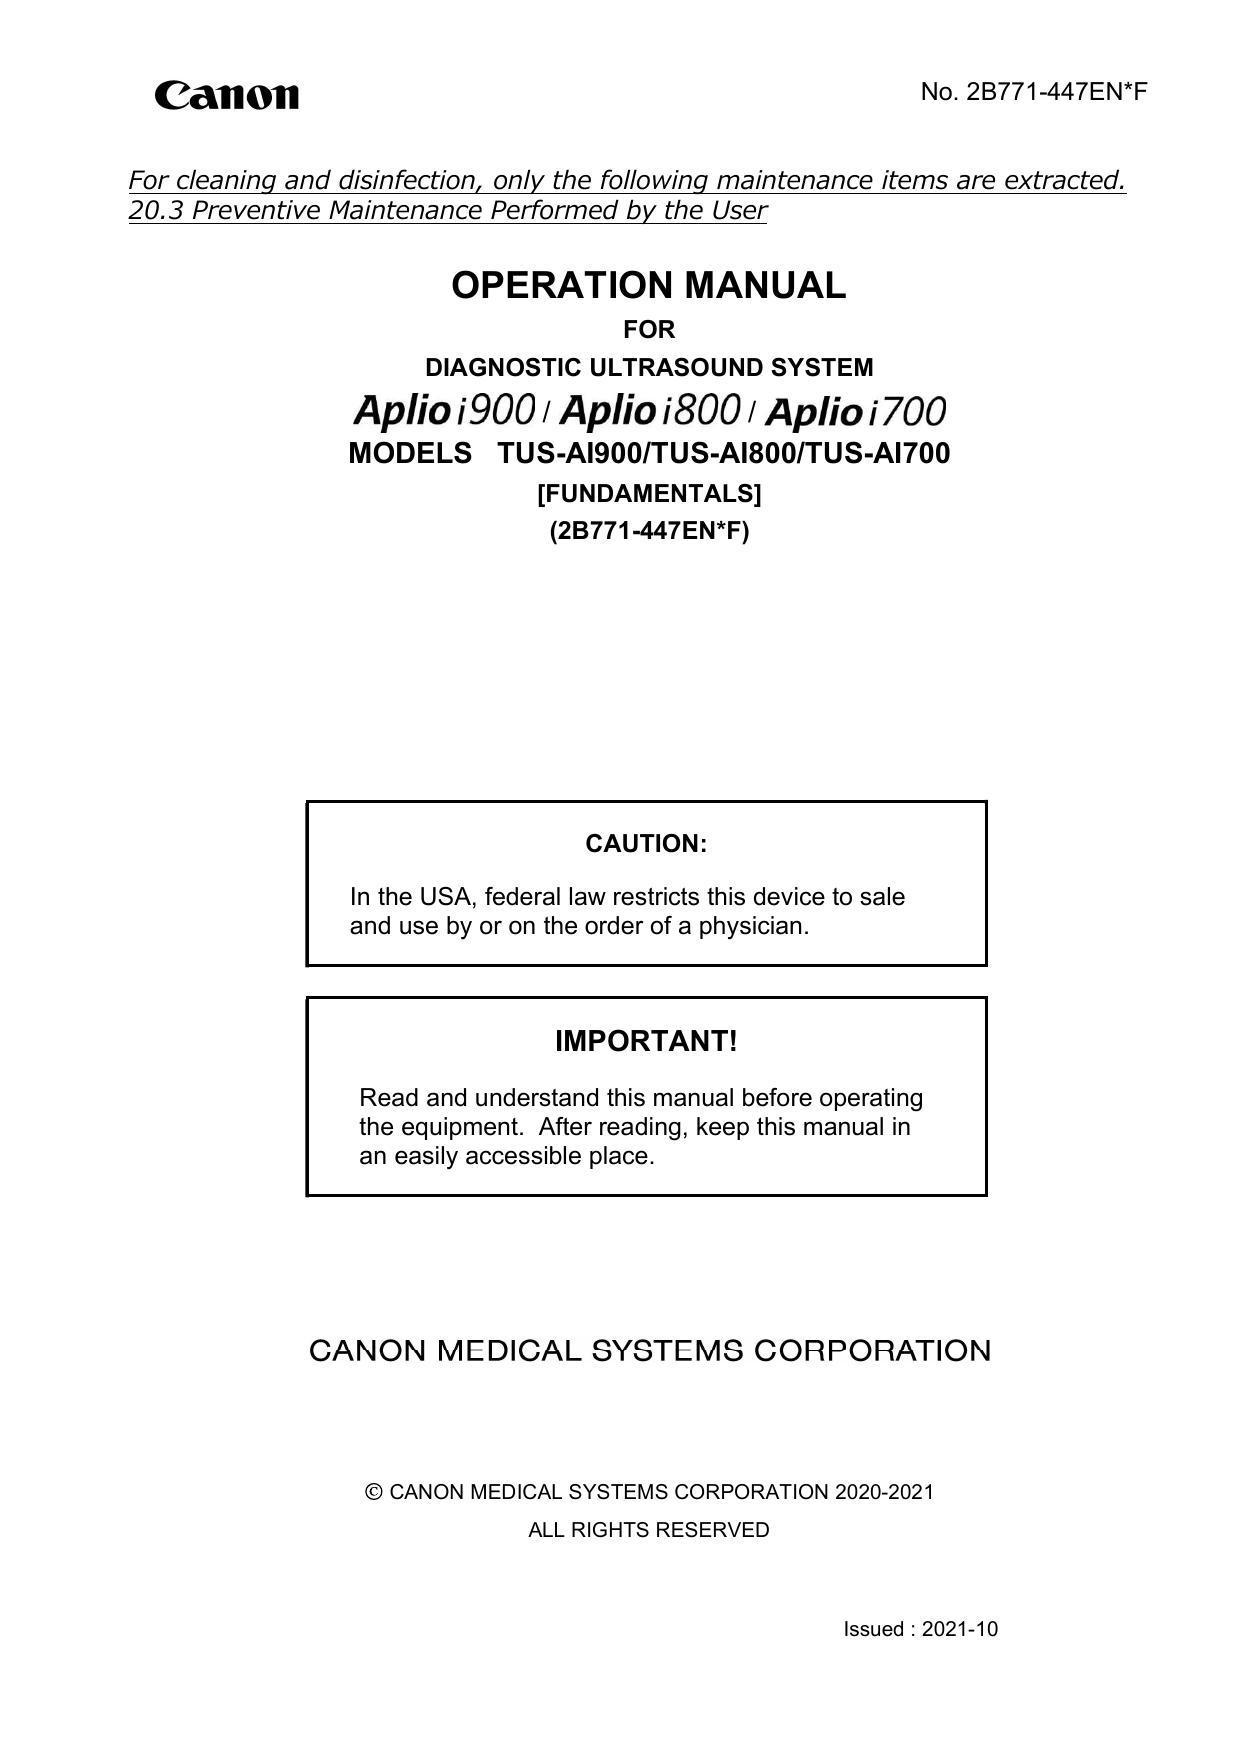 operation-manual-for-diagnostic-ultrasound-system-aplio-i900-aplio-i800-aplio-i700-models-tus-ai900-tus-ai800-tus-ai700-fundamentals.pdf